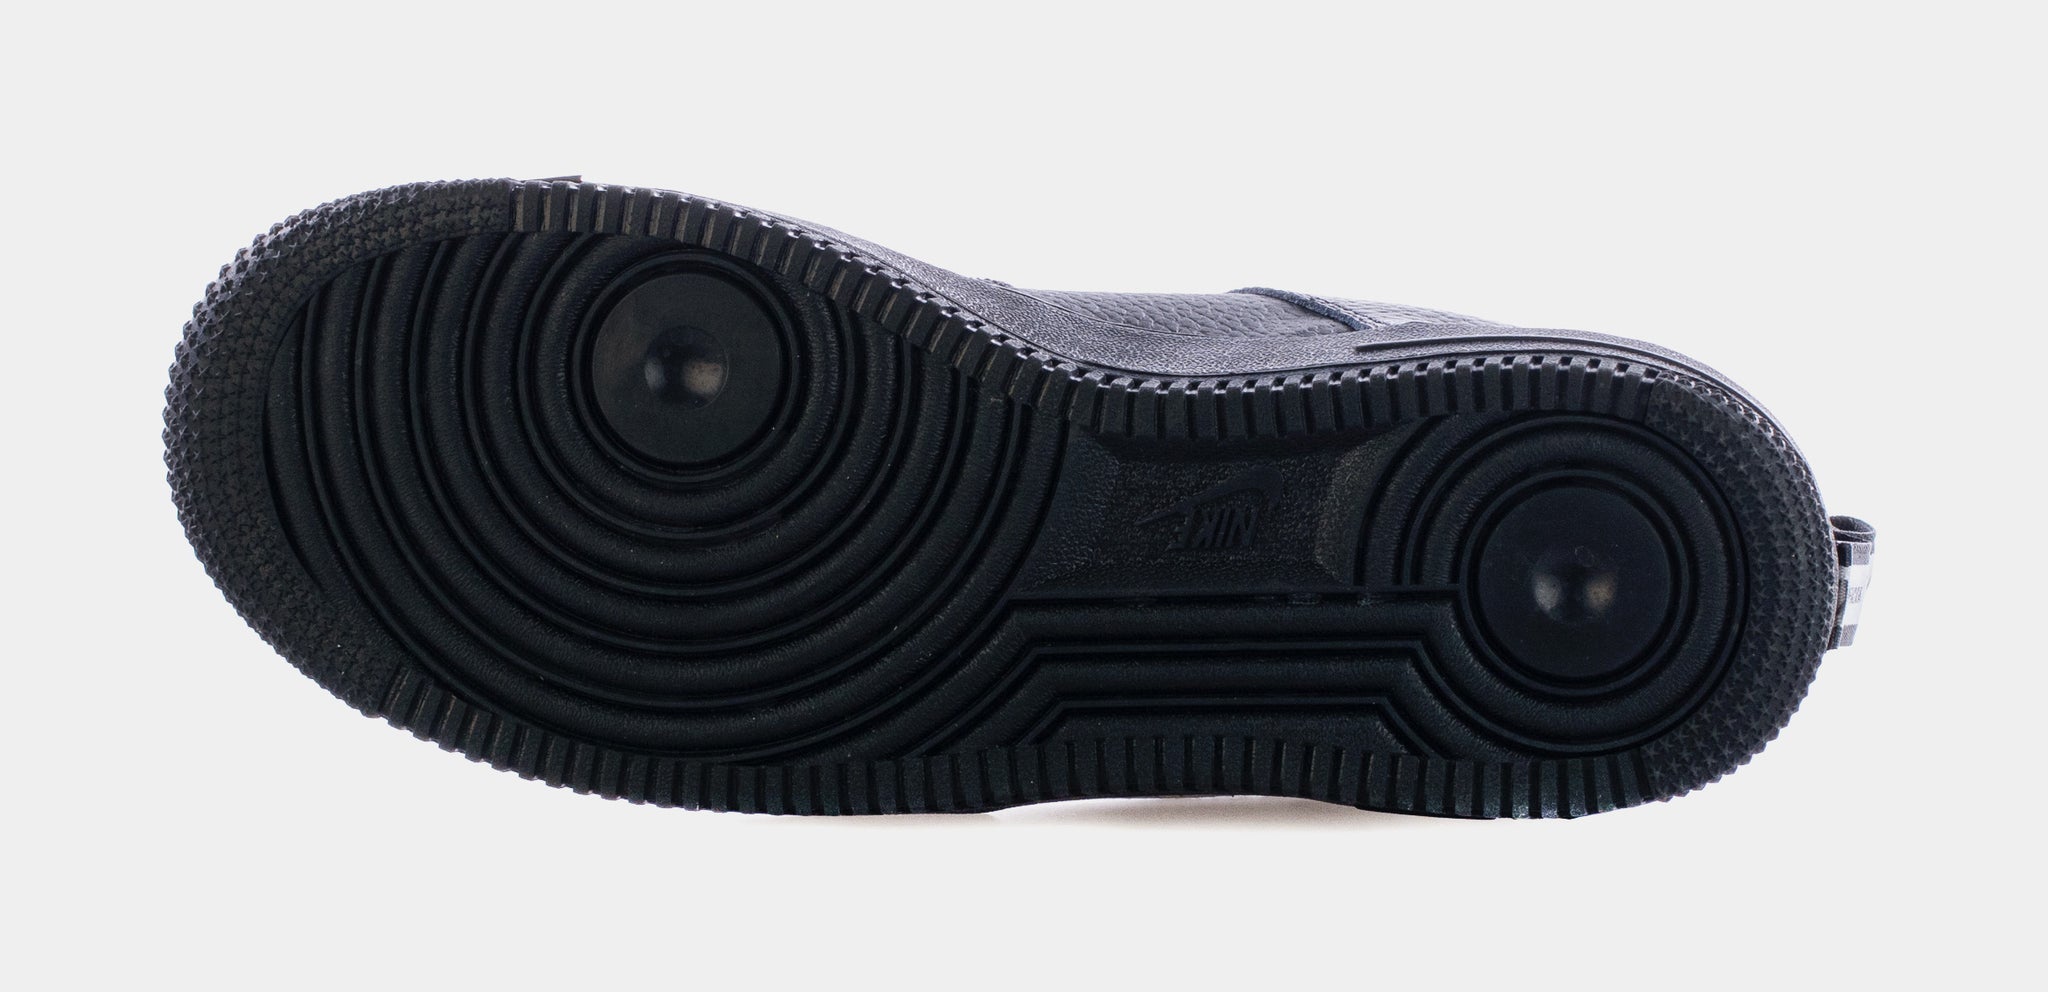 Nike Air Force 1 LV8 Utility Big Kids' Shoe Size 5Y (Volt)